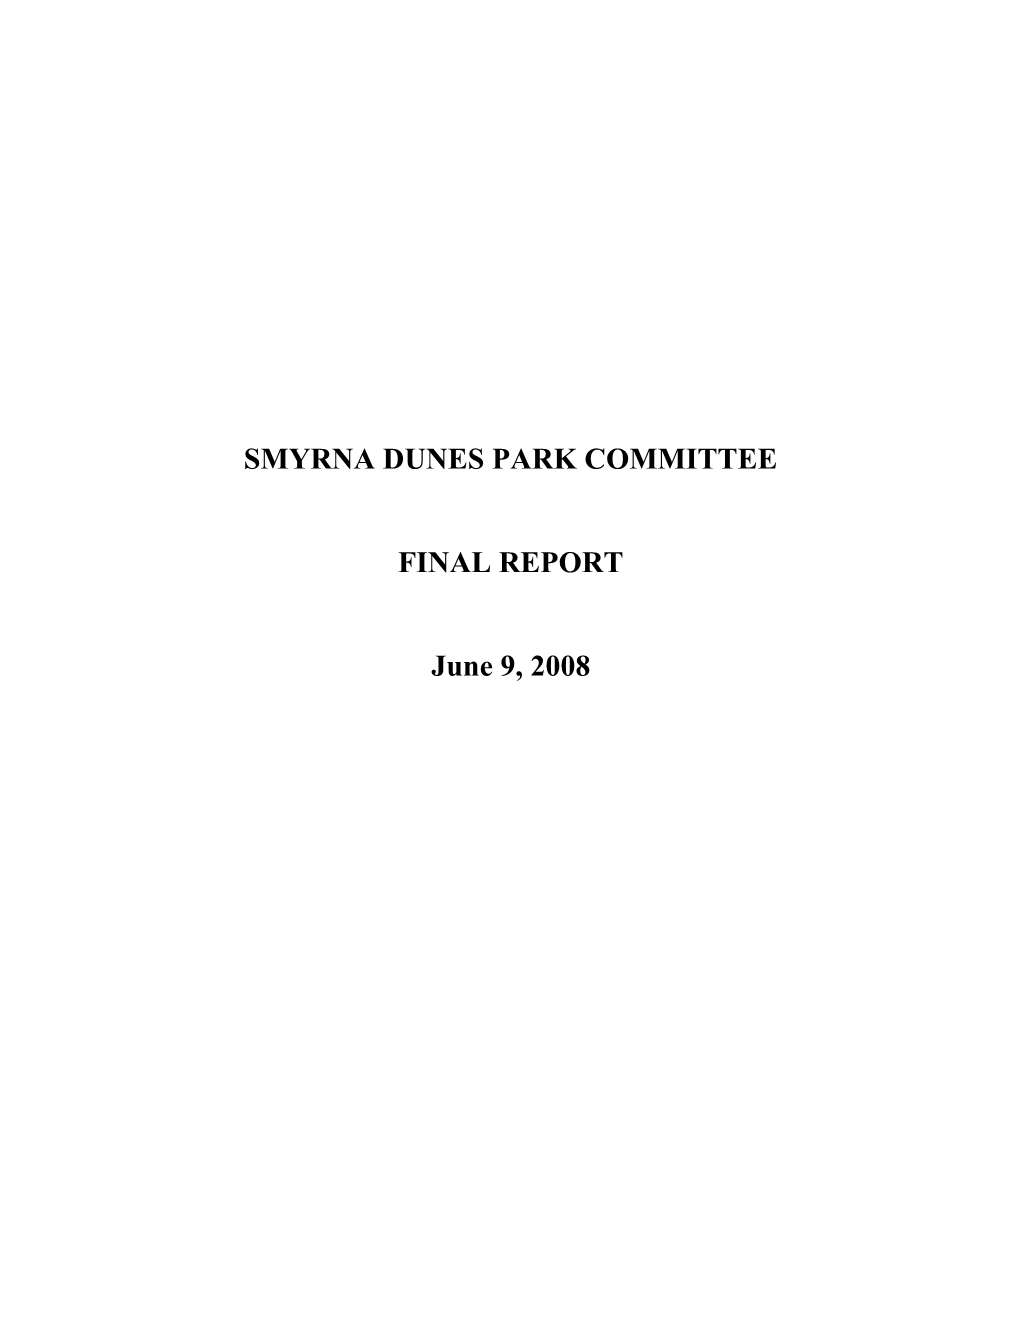 Smyrna Dunes Park Committee